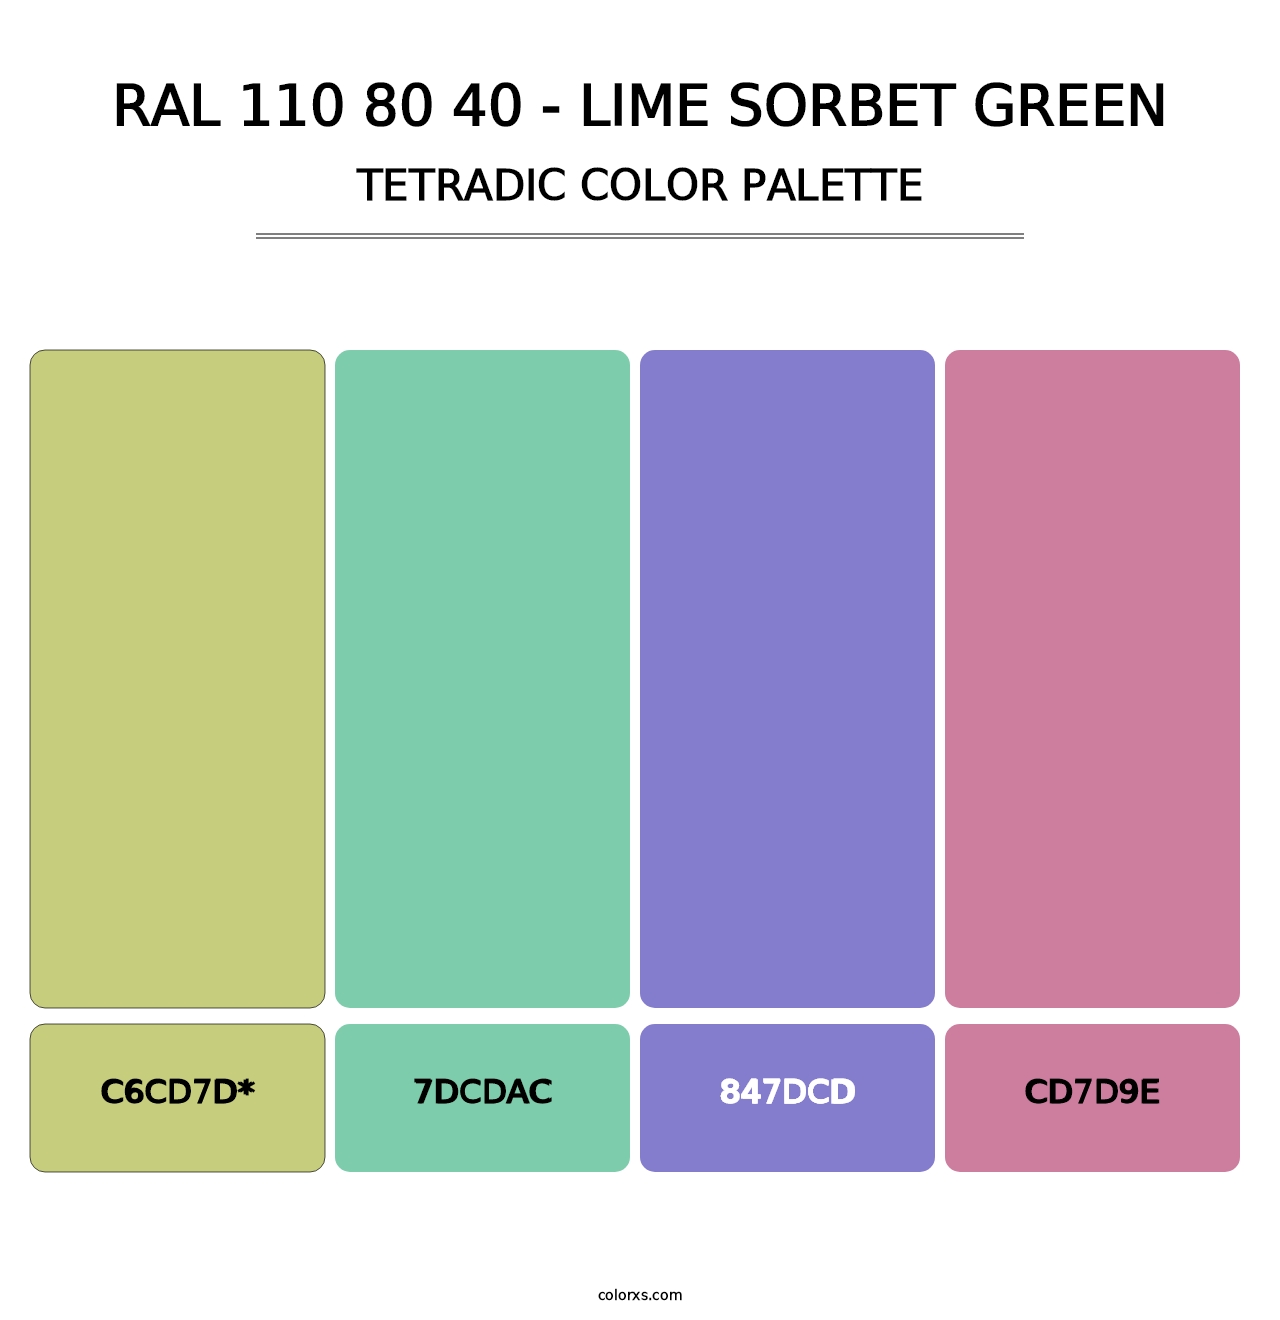 RAL 110 80 40 - Lime Sorbet Green - Tetradic Color Palette